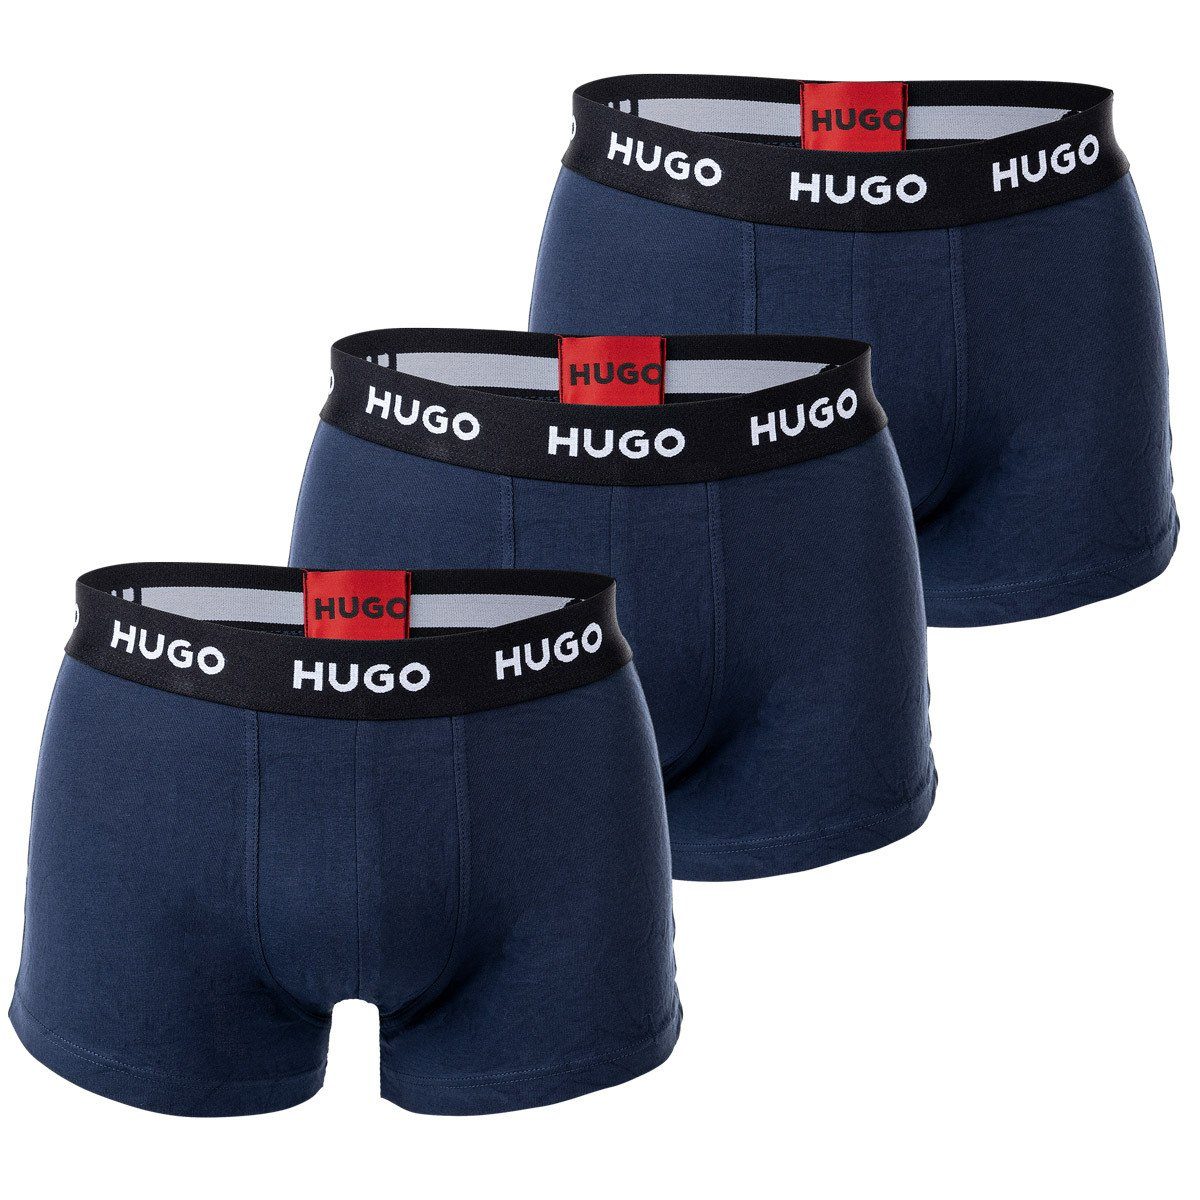 Wäsche/Bademode Boxershorts HUGO Boxer Herren Boxer Shorts, 3er Pack - Trunks Triplet